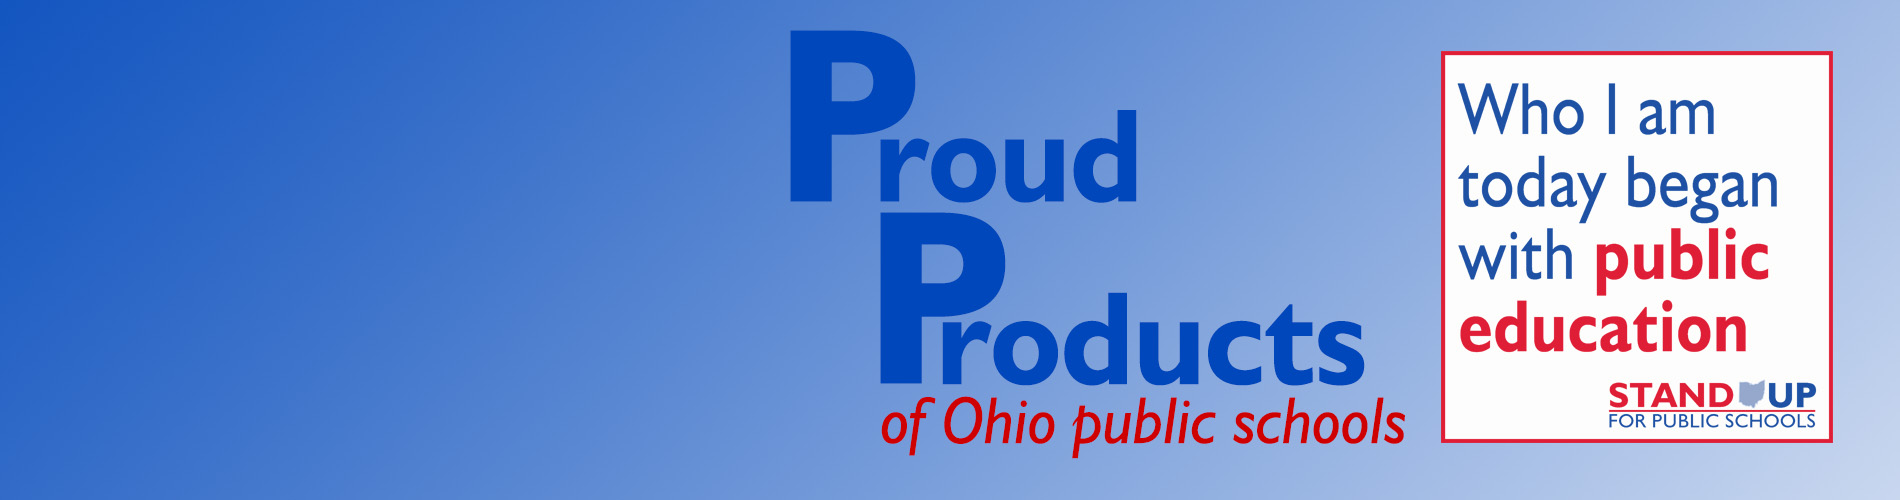 Proud Products of Ohio Public Schools